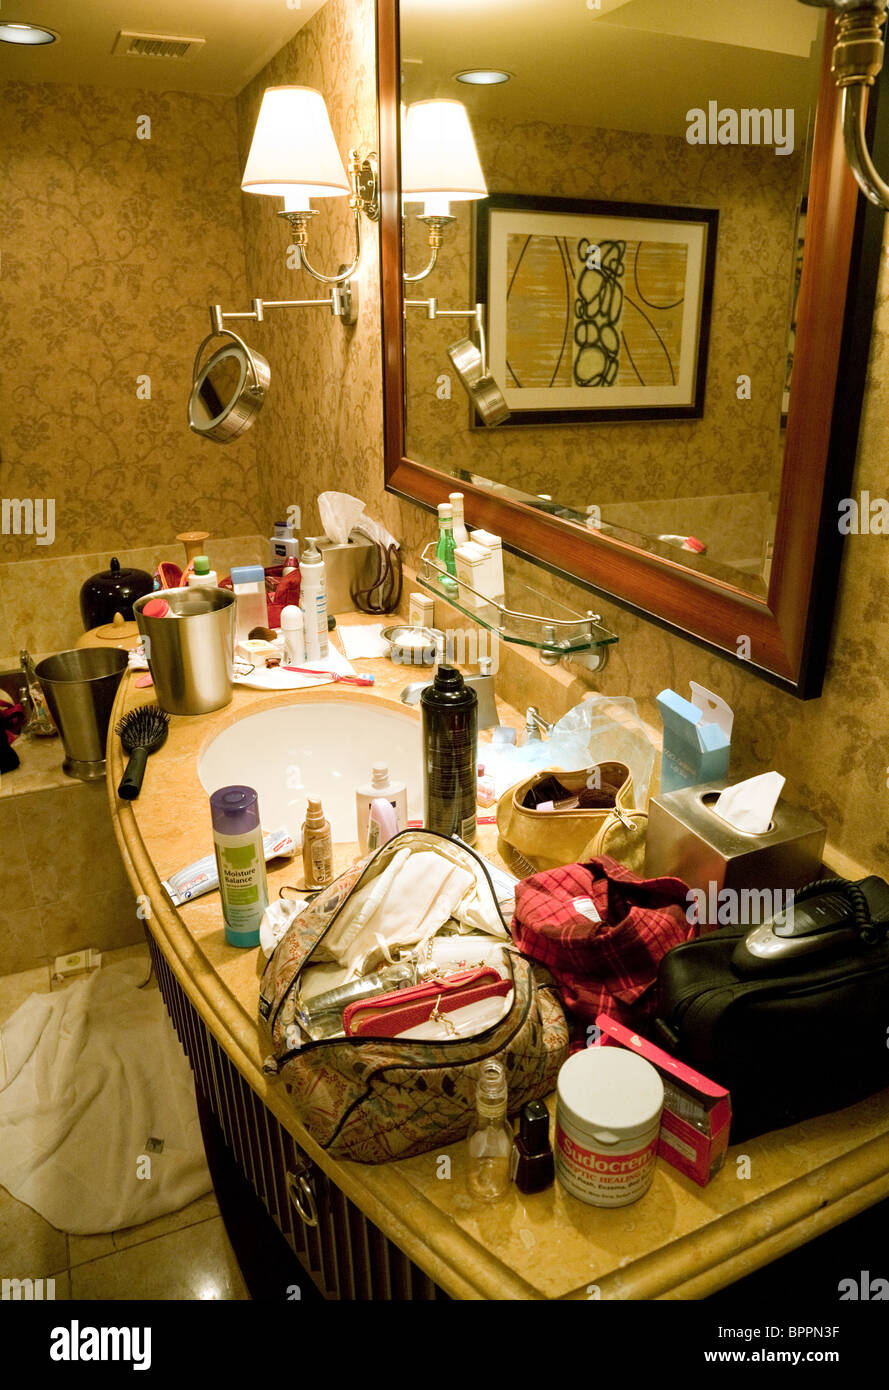 Very untidy hotel bathroom, the Bellagio Hotel, Las Vegas Nevada USA Stock Photo